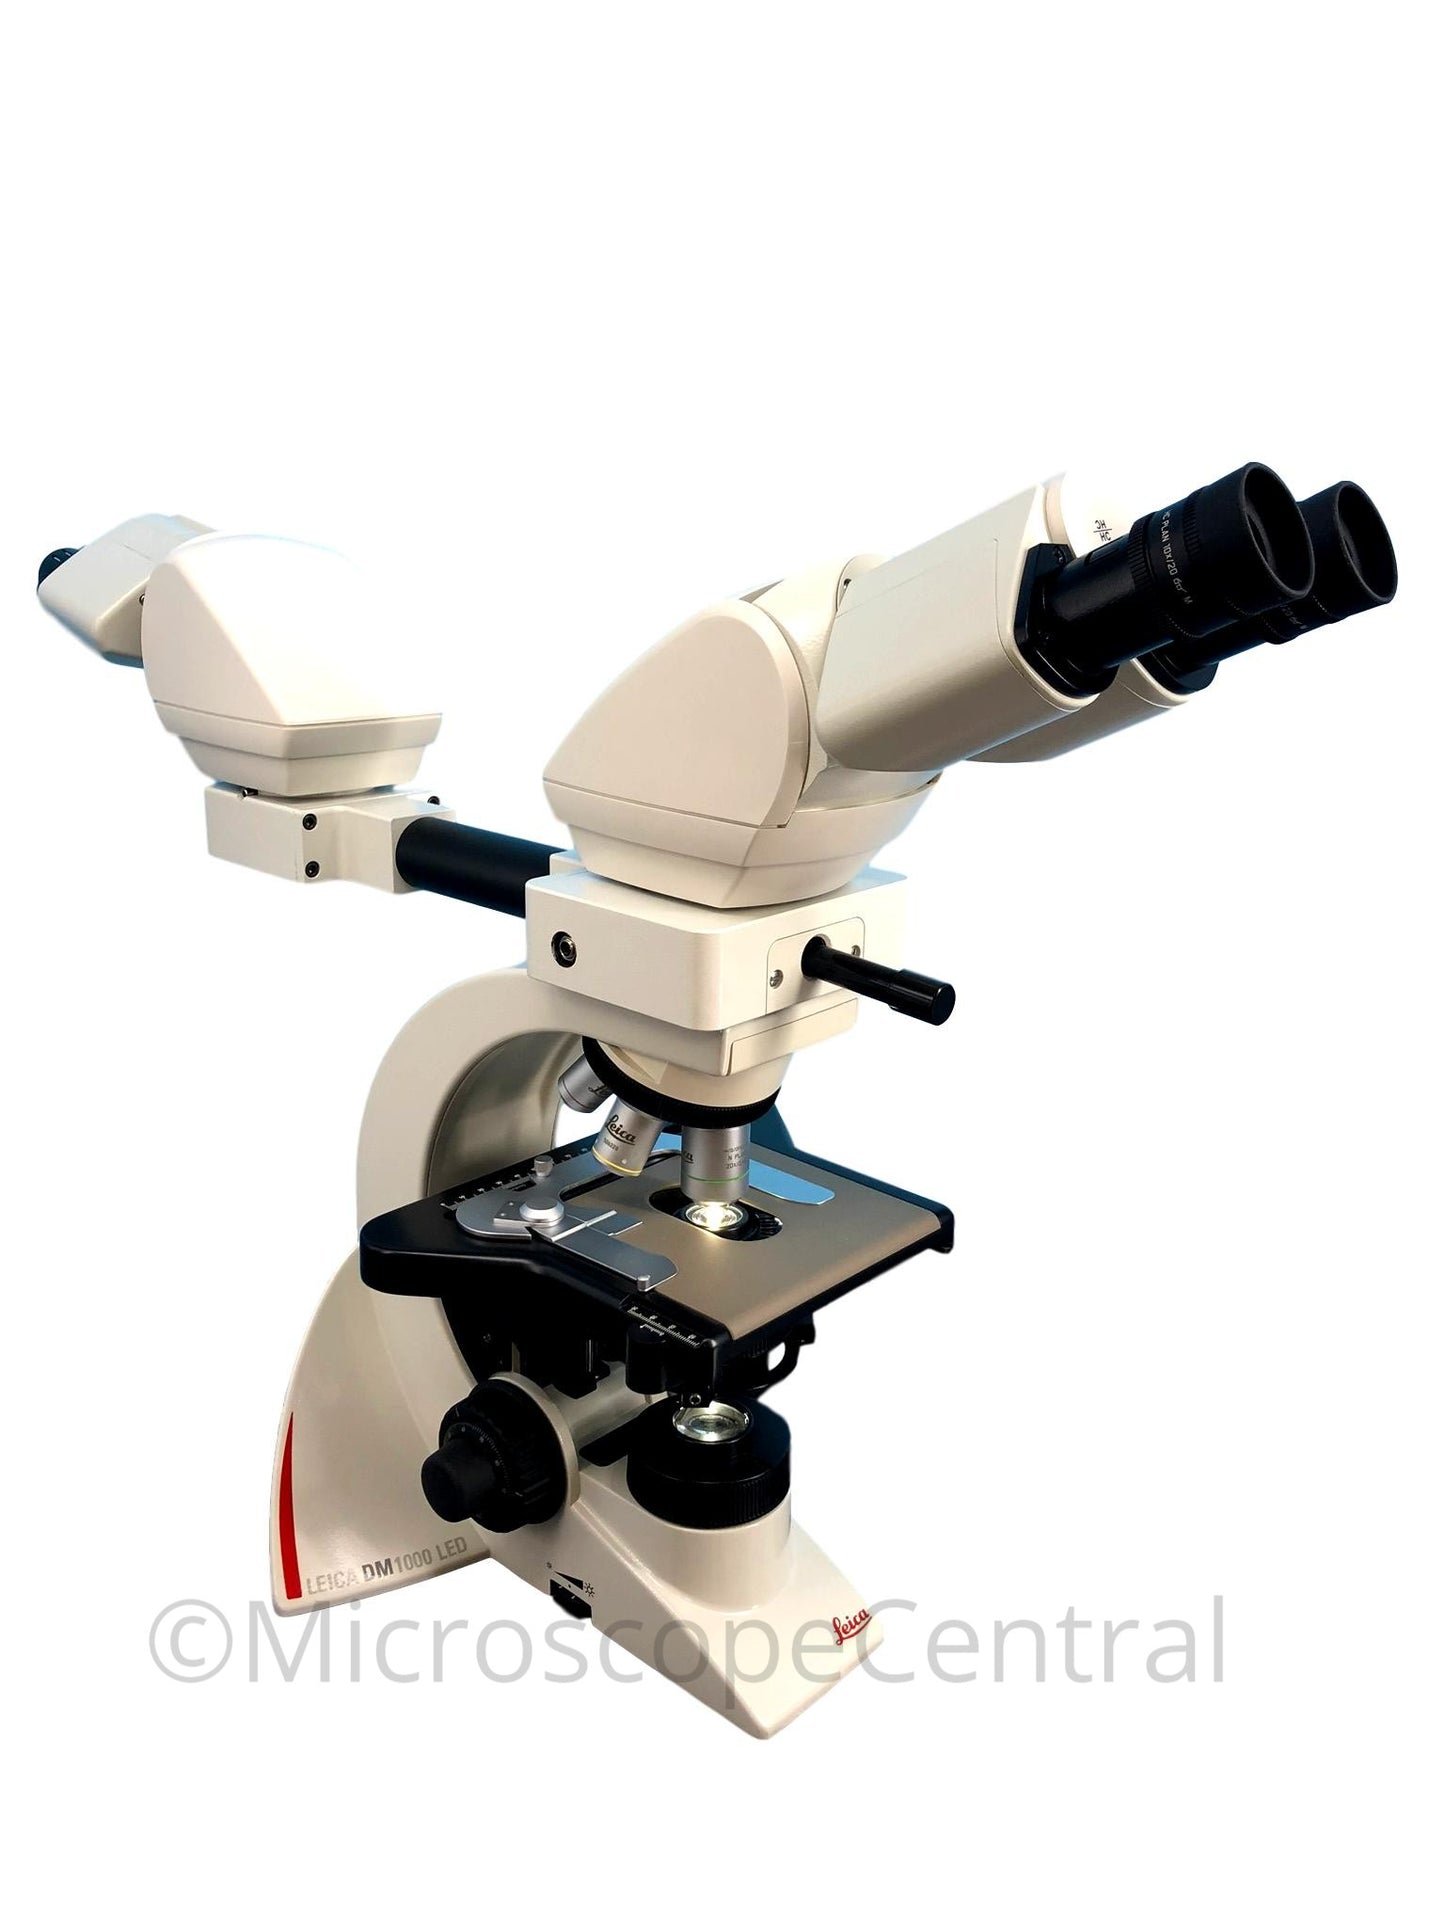 Leica DM1000 Dual Viewing Microscope